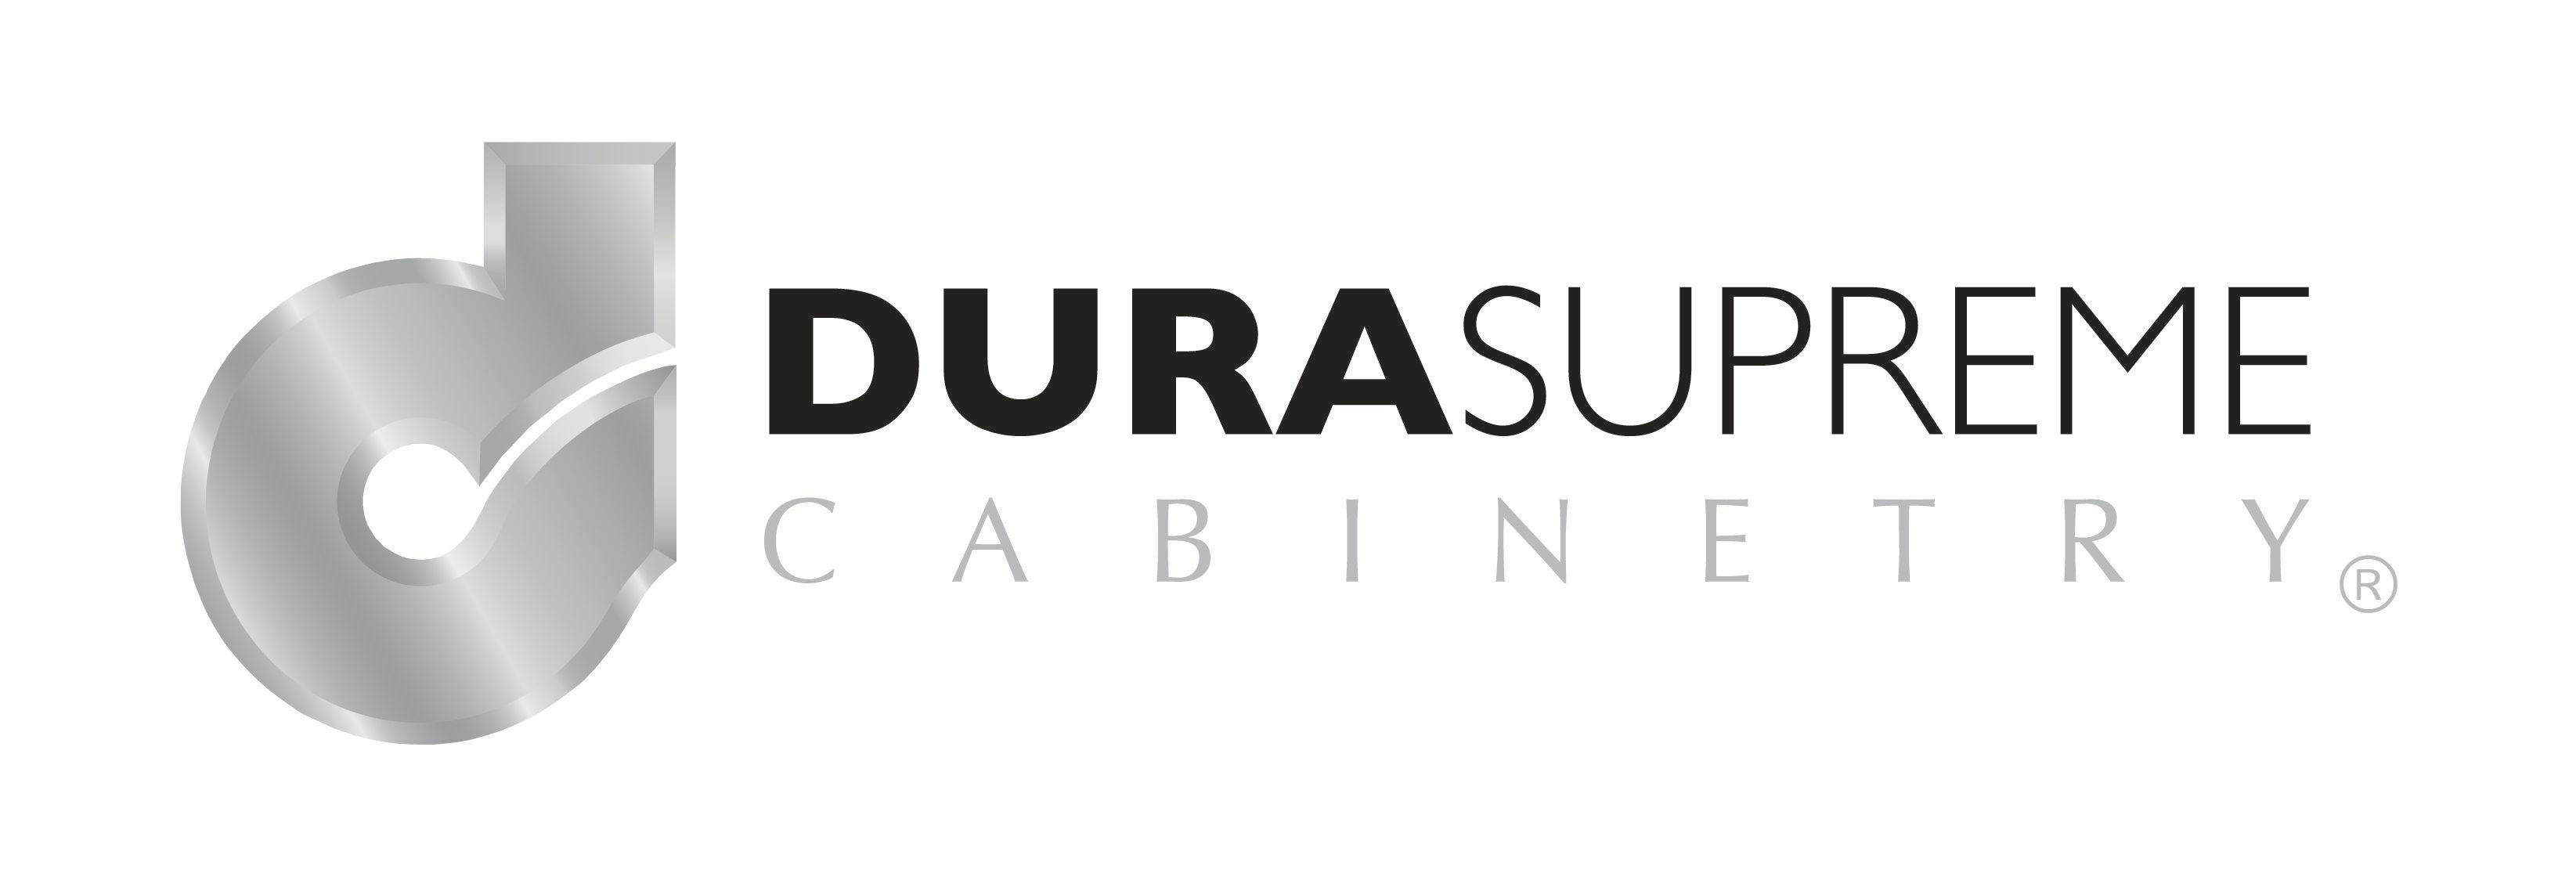 Cabinetry Logo - Logo Files | Dura Supreme Cabinetry